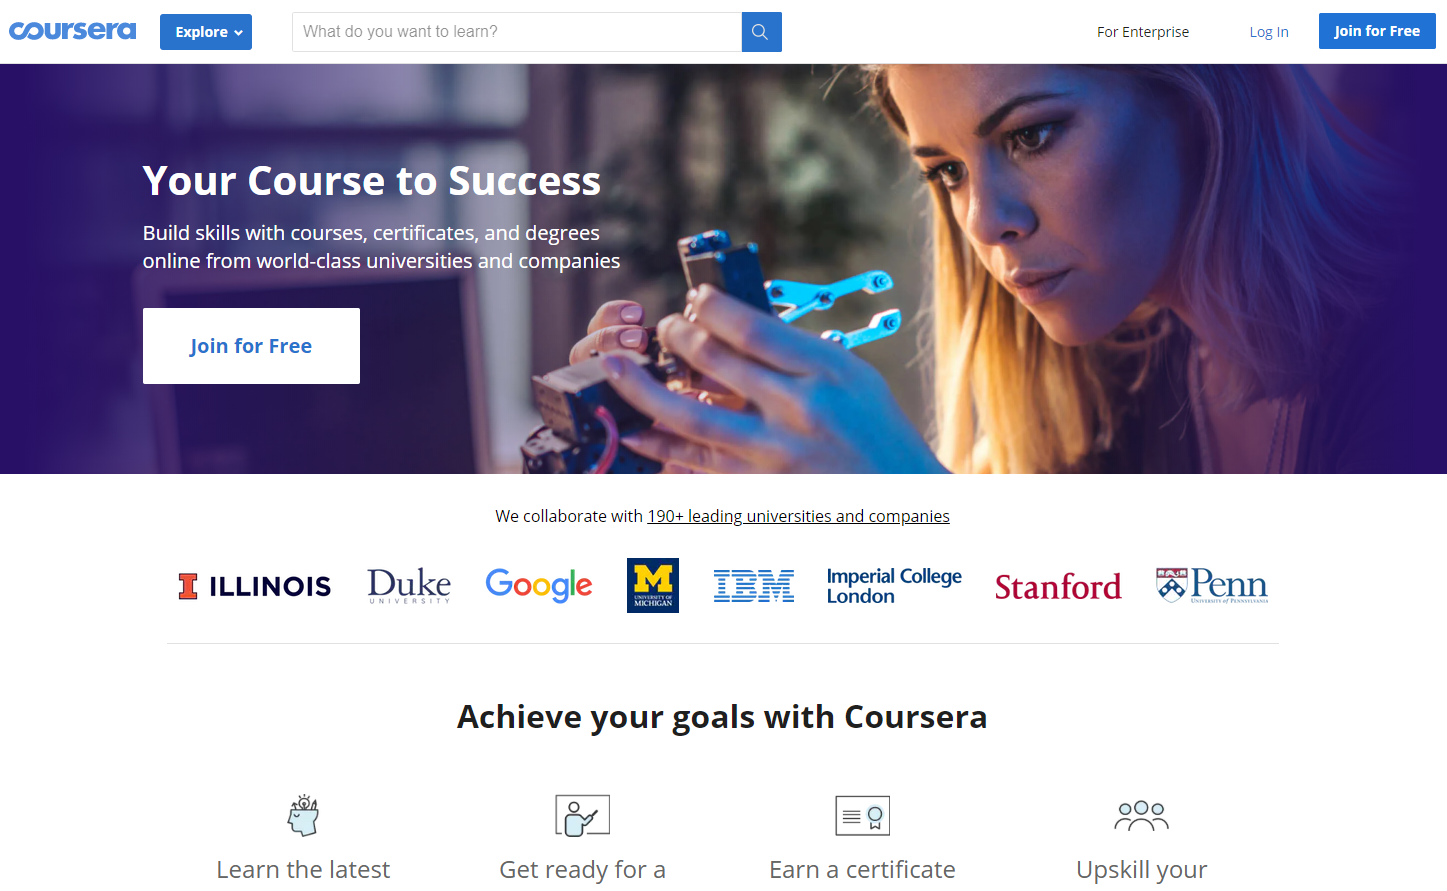 Coursera Online Courses